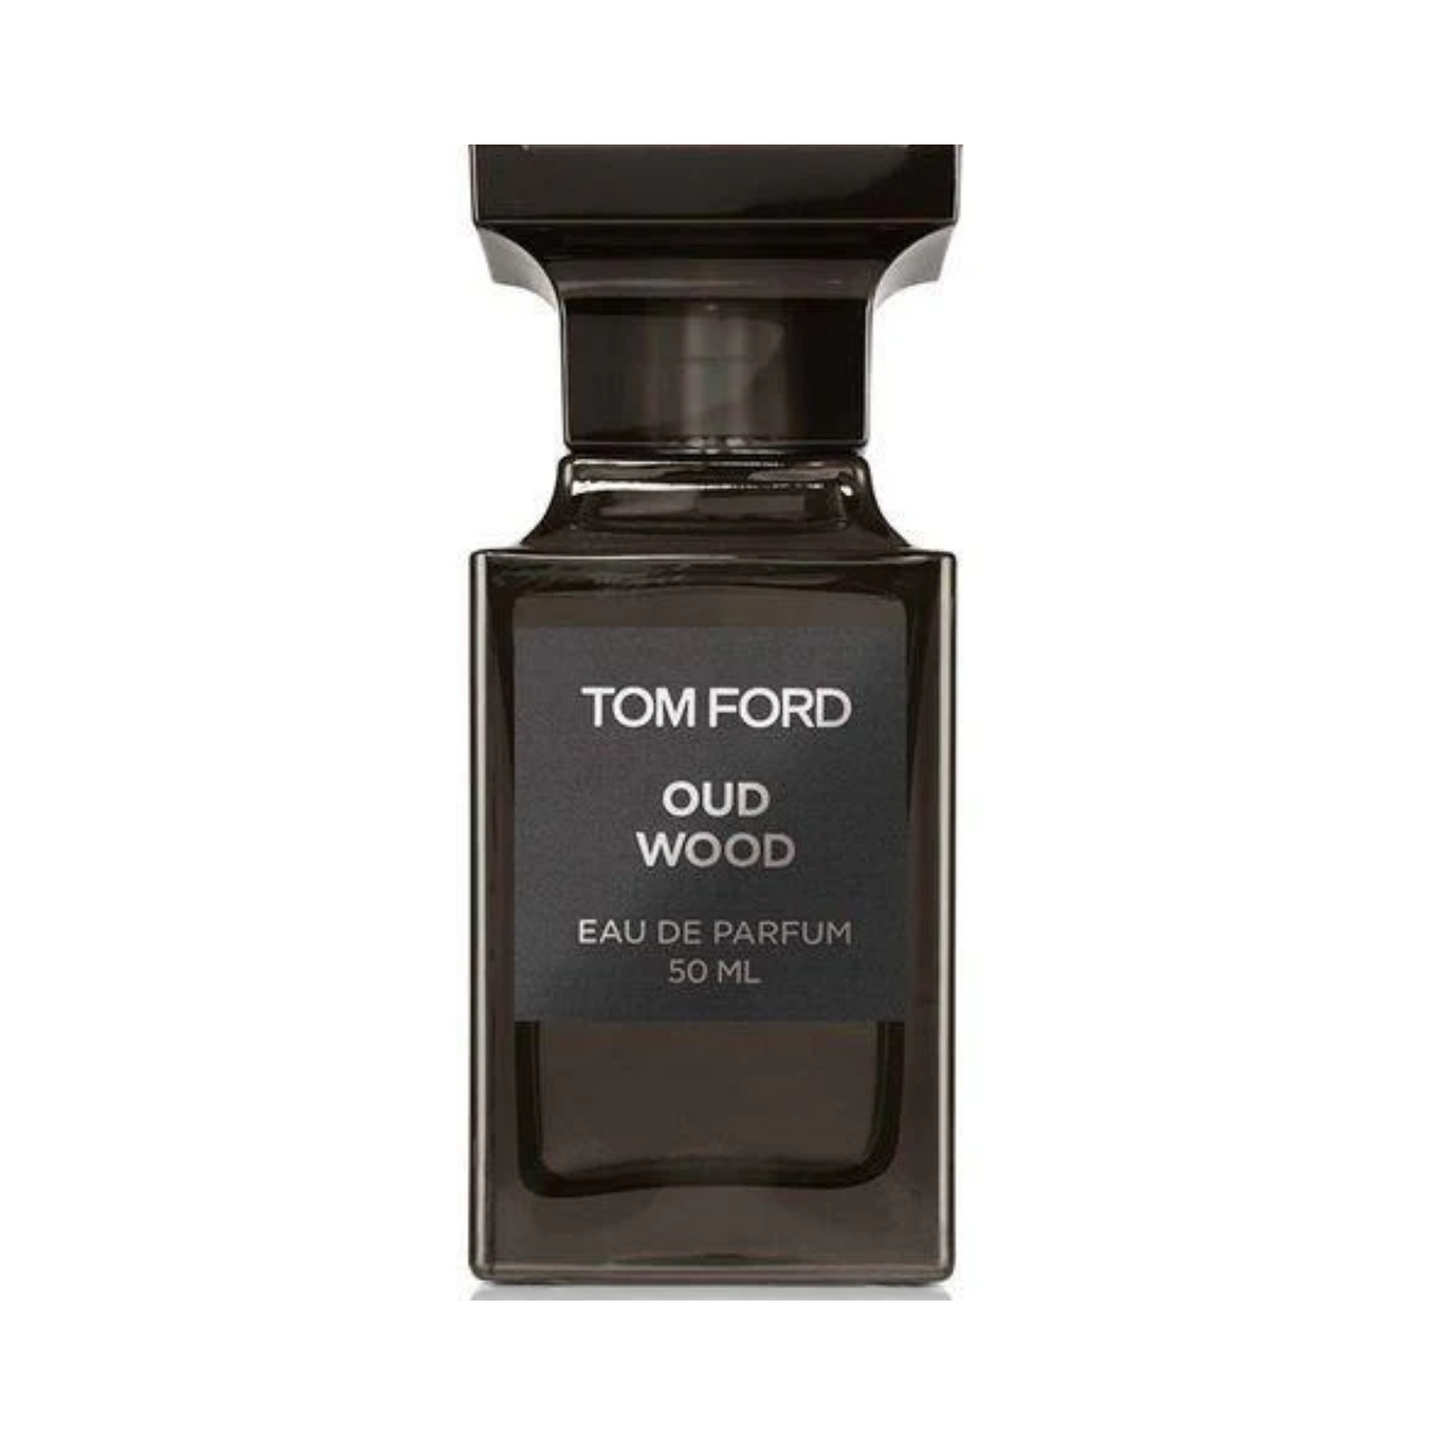 Tom Ford Oud Wood type Perfume